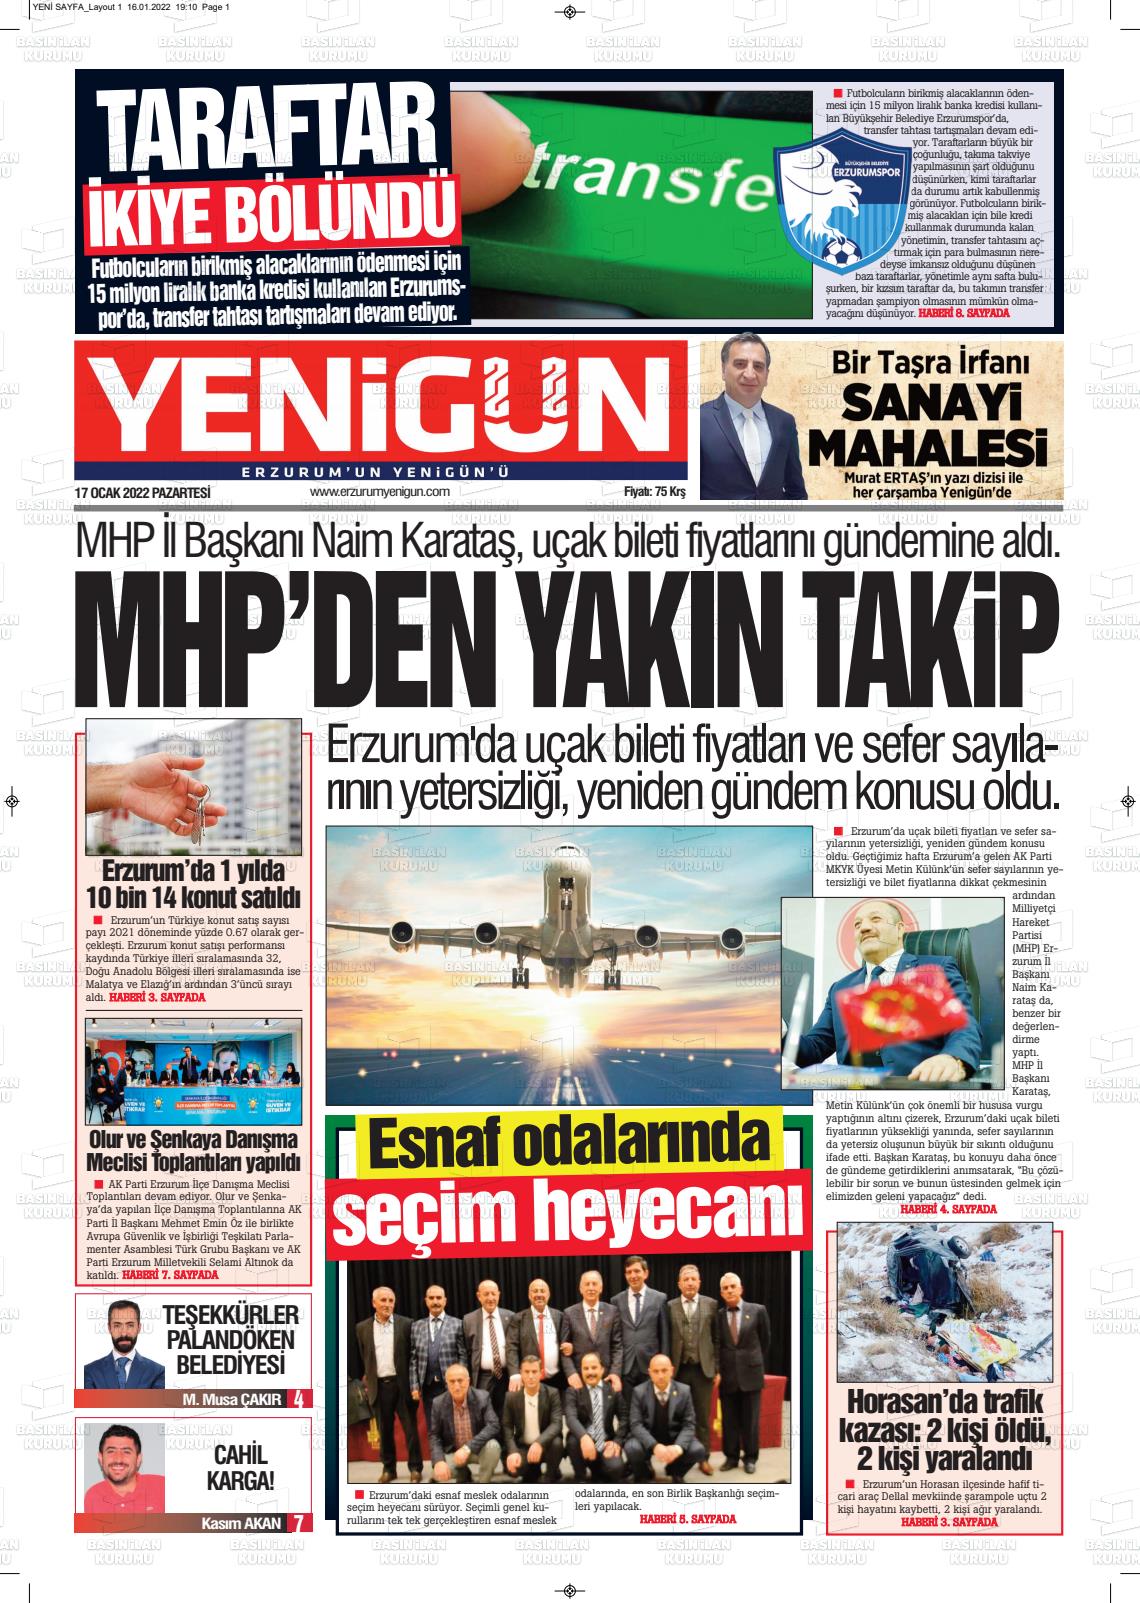 17 Ocak 2022 Erzurum Yenigün Gazete Manşeti